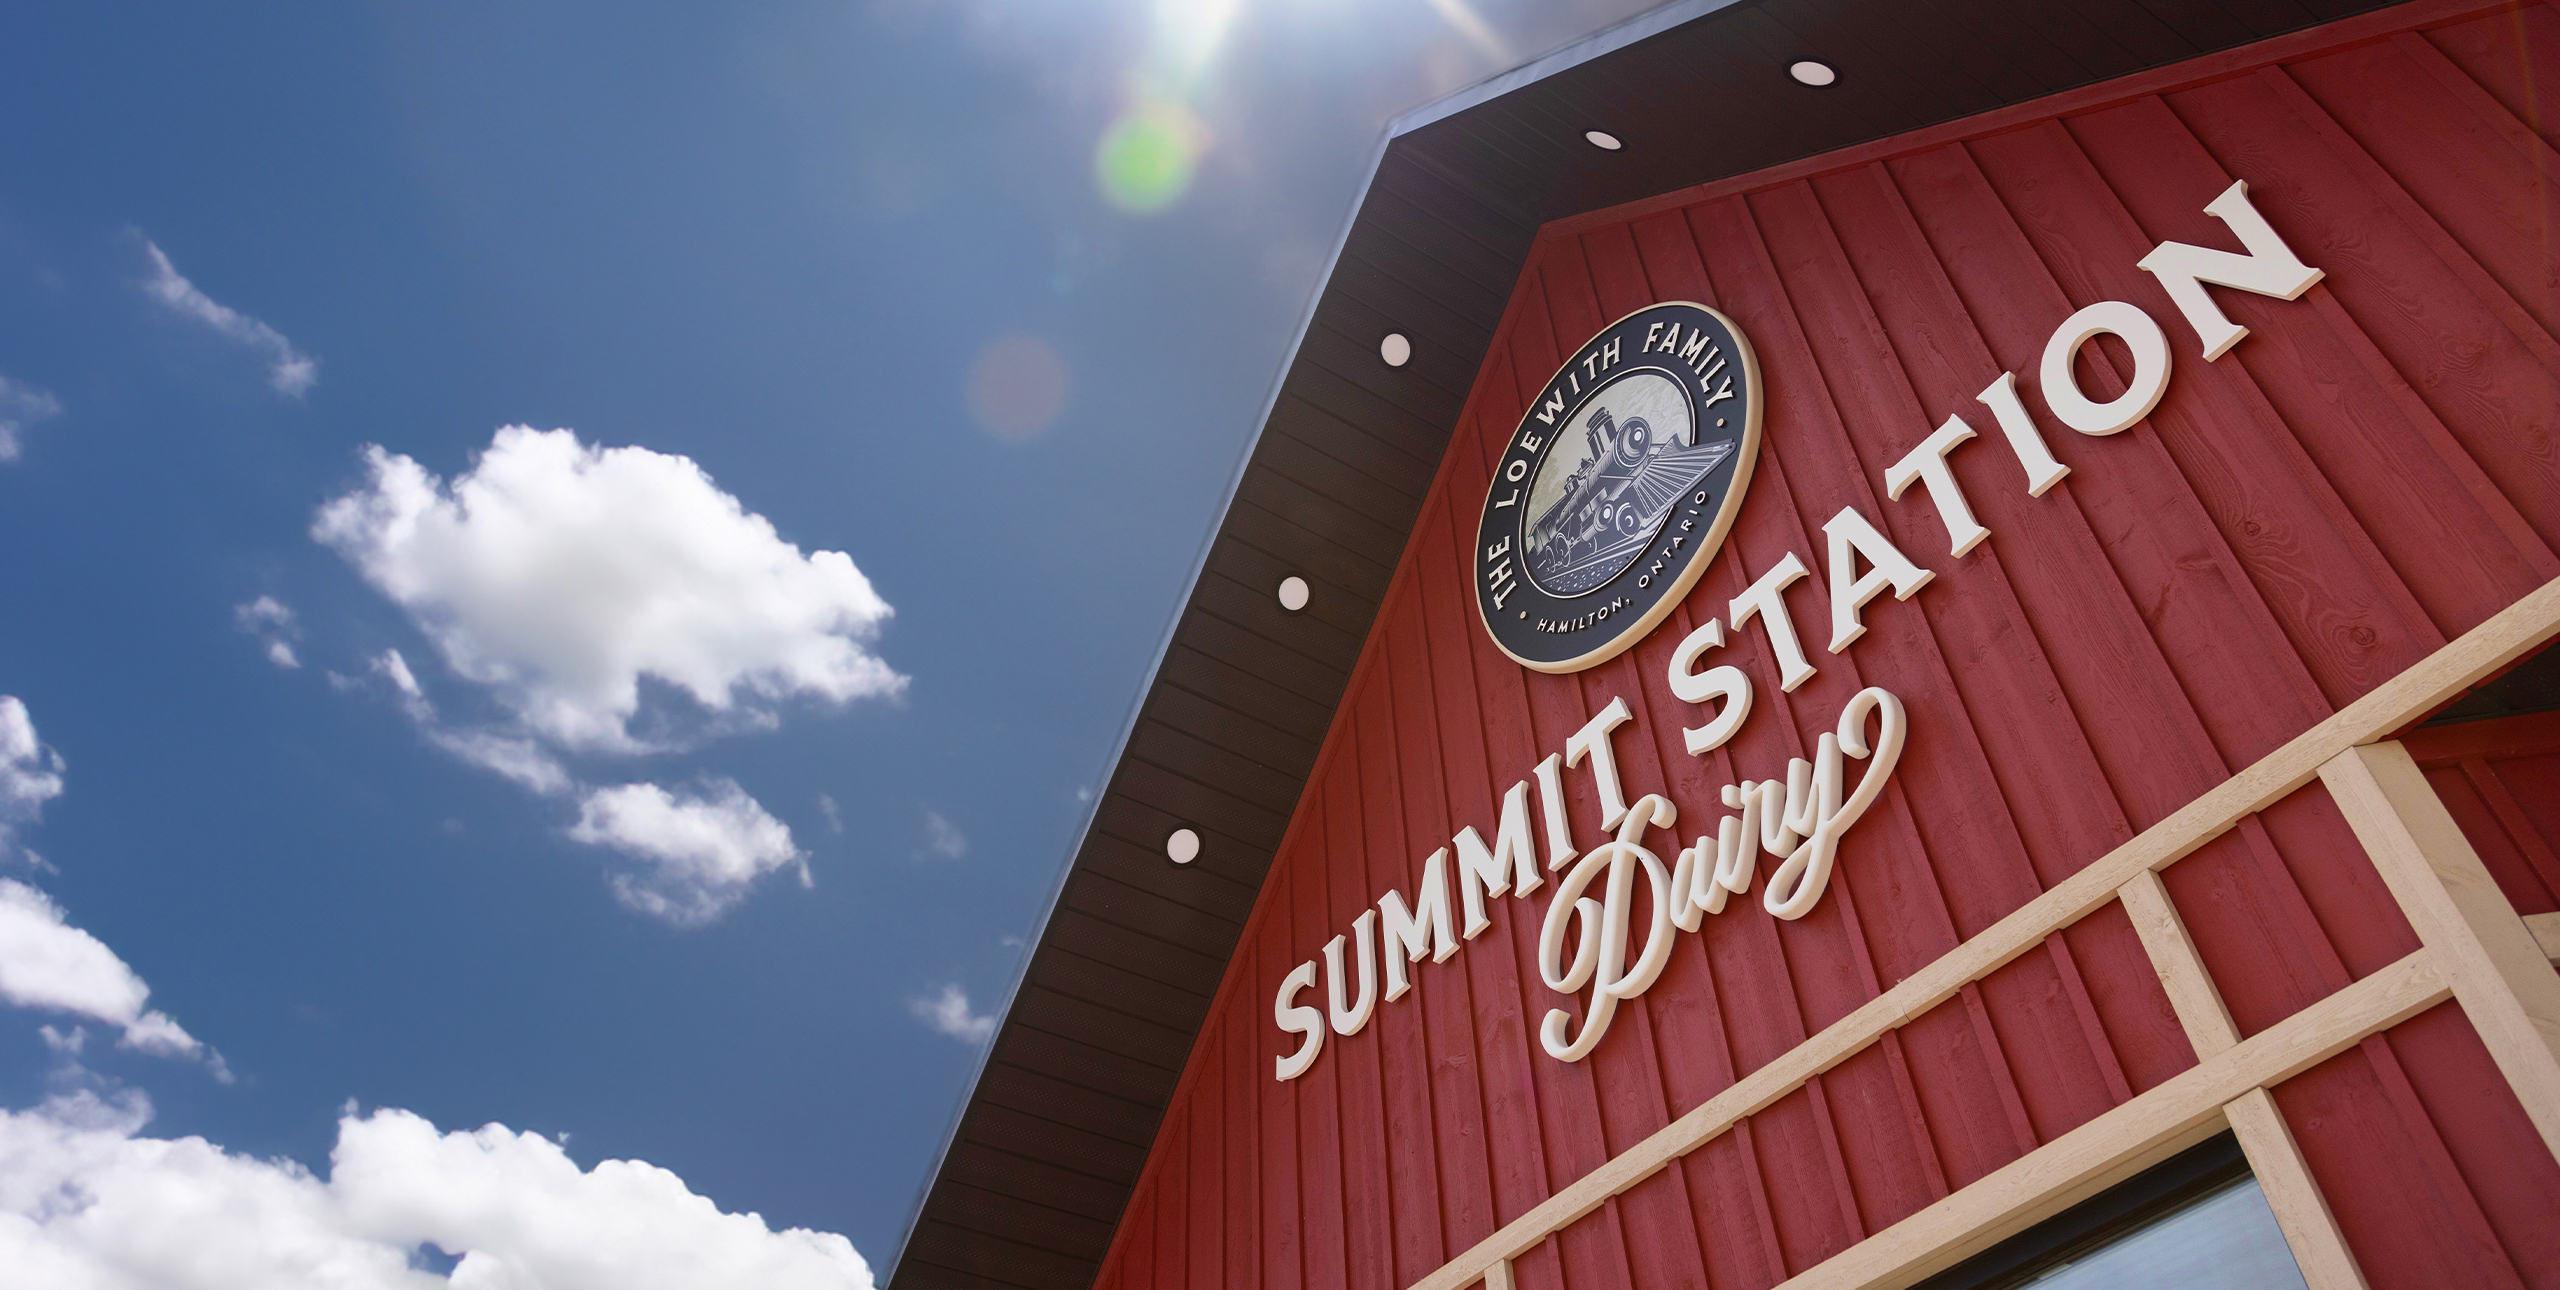 Summit Station Dairy farm house signage